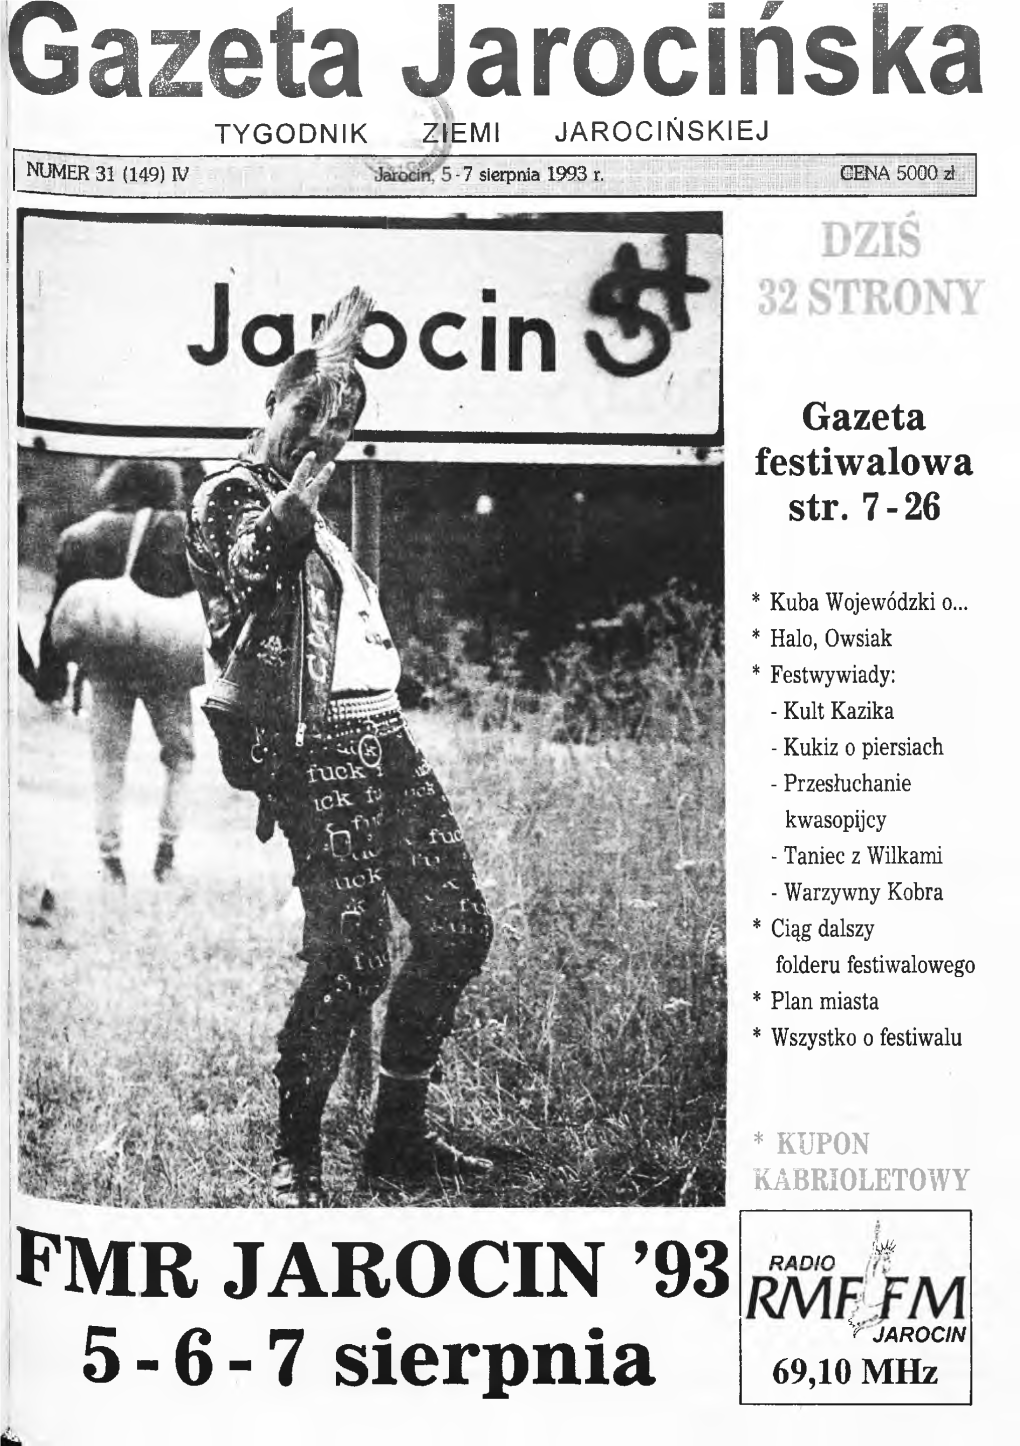 PMR JAROCIN '93 5-6-7 Sierpnia